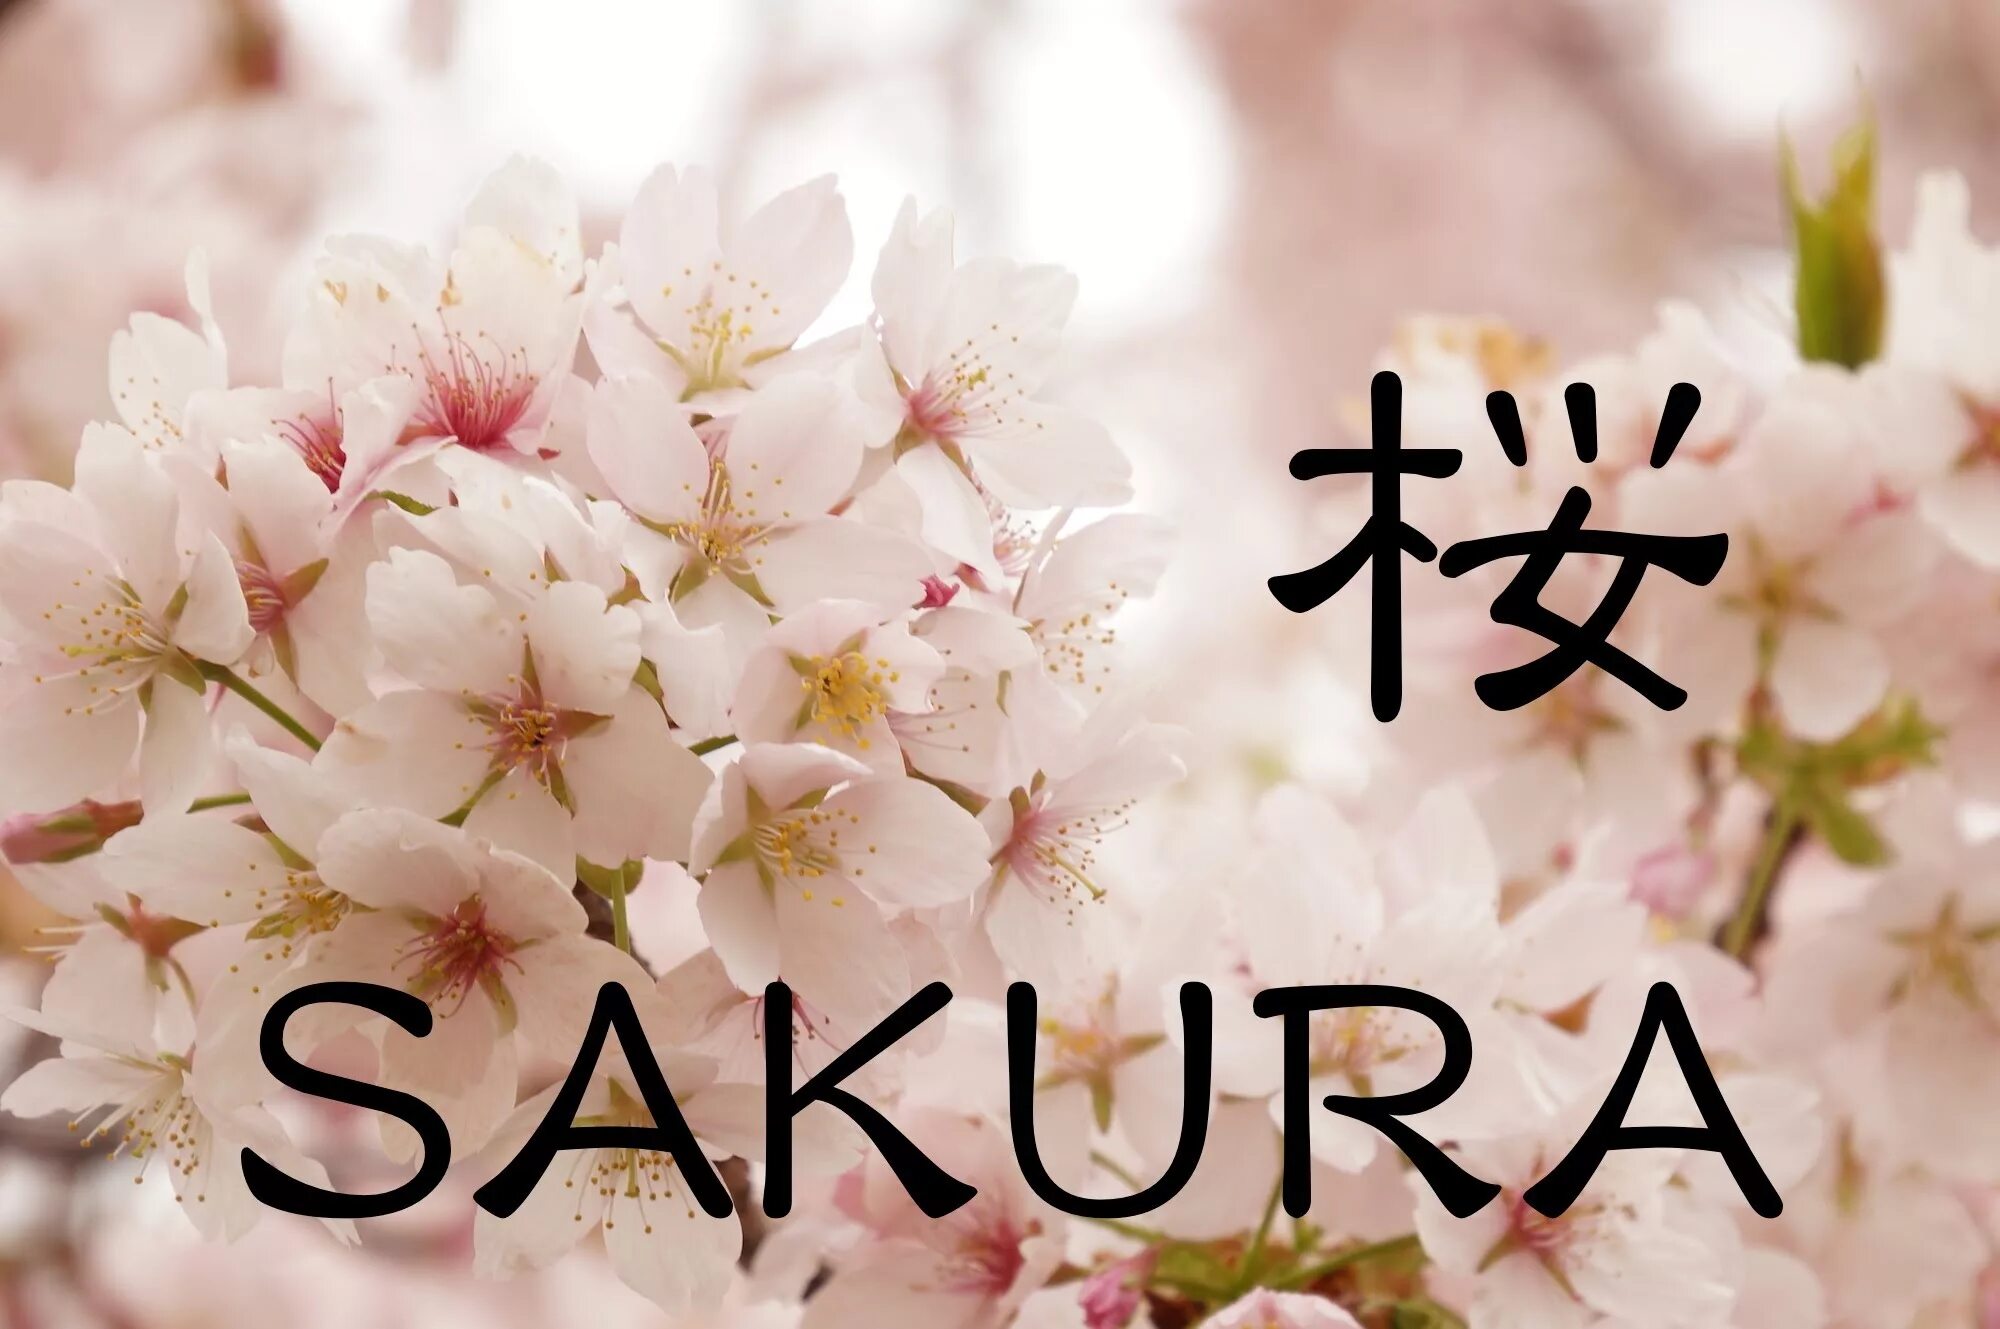 Сакура что означает. Сакура надпись. Сакура имя. Японская Сакура. Иероглиф Сакура.